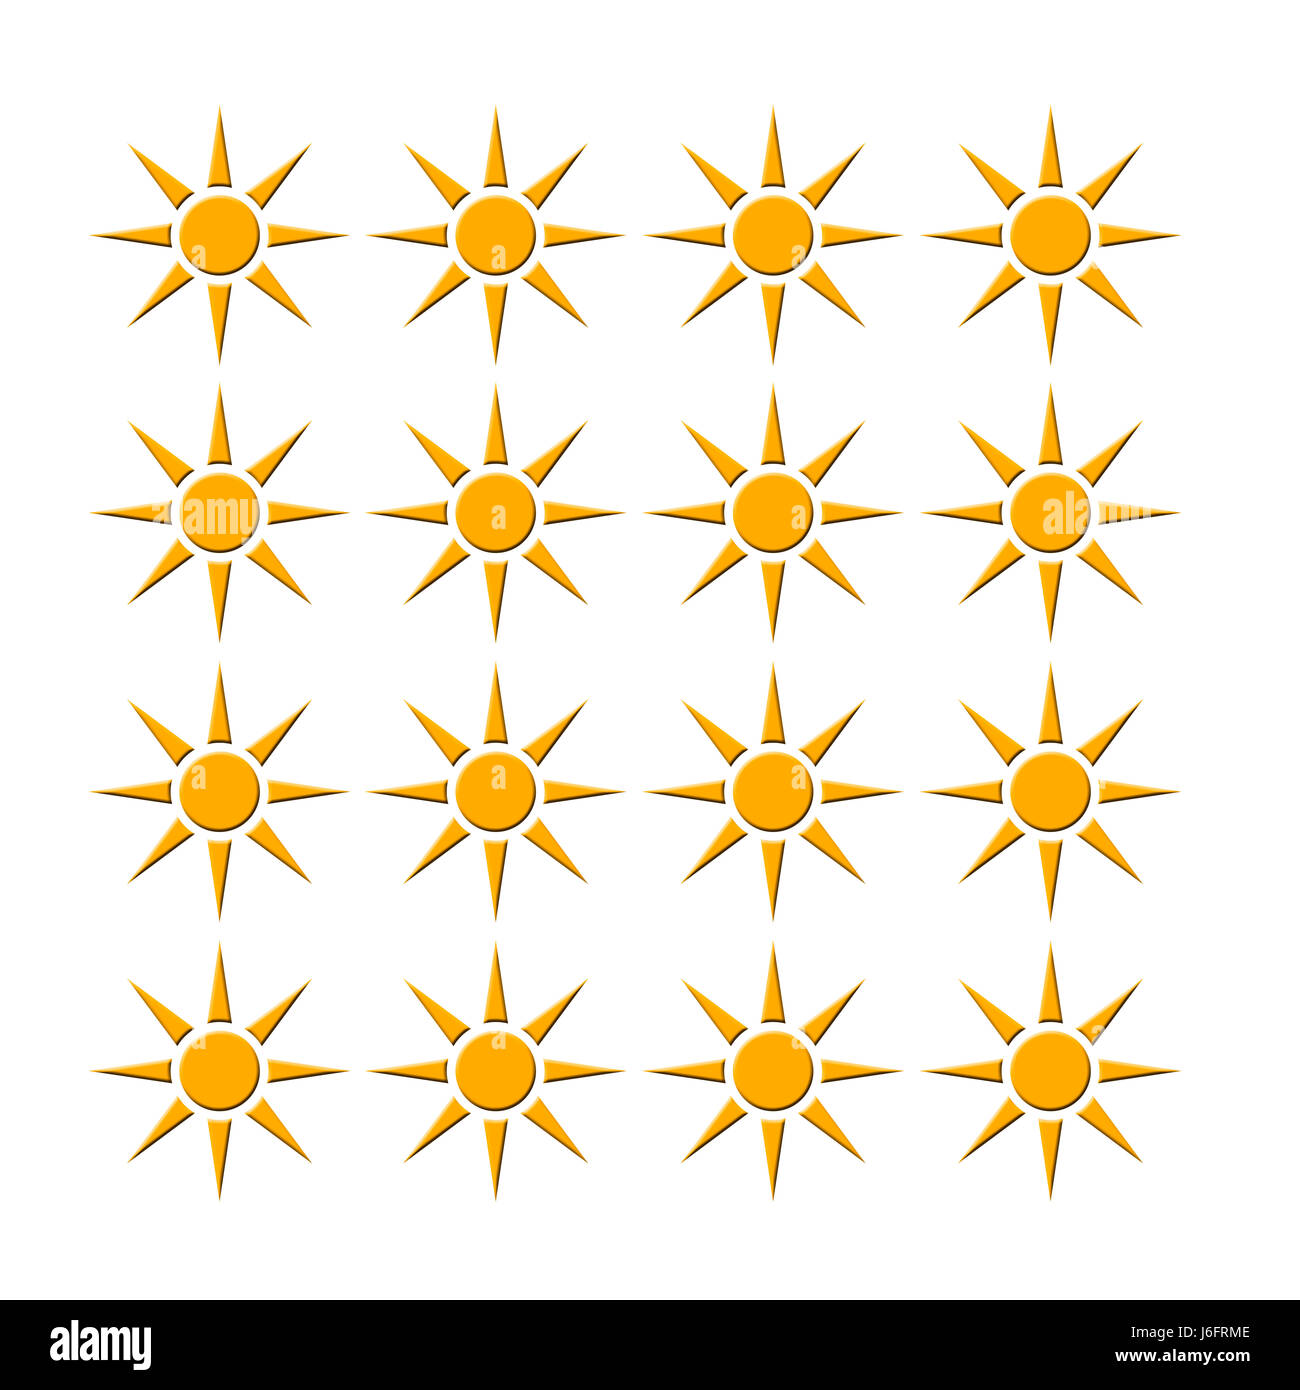 suns radiate radiation design shaping formation shape model figure rays gold Stock Photo